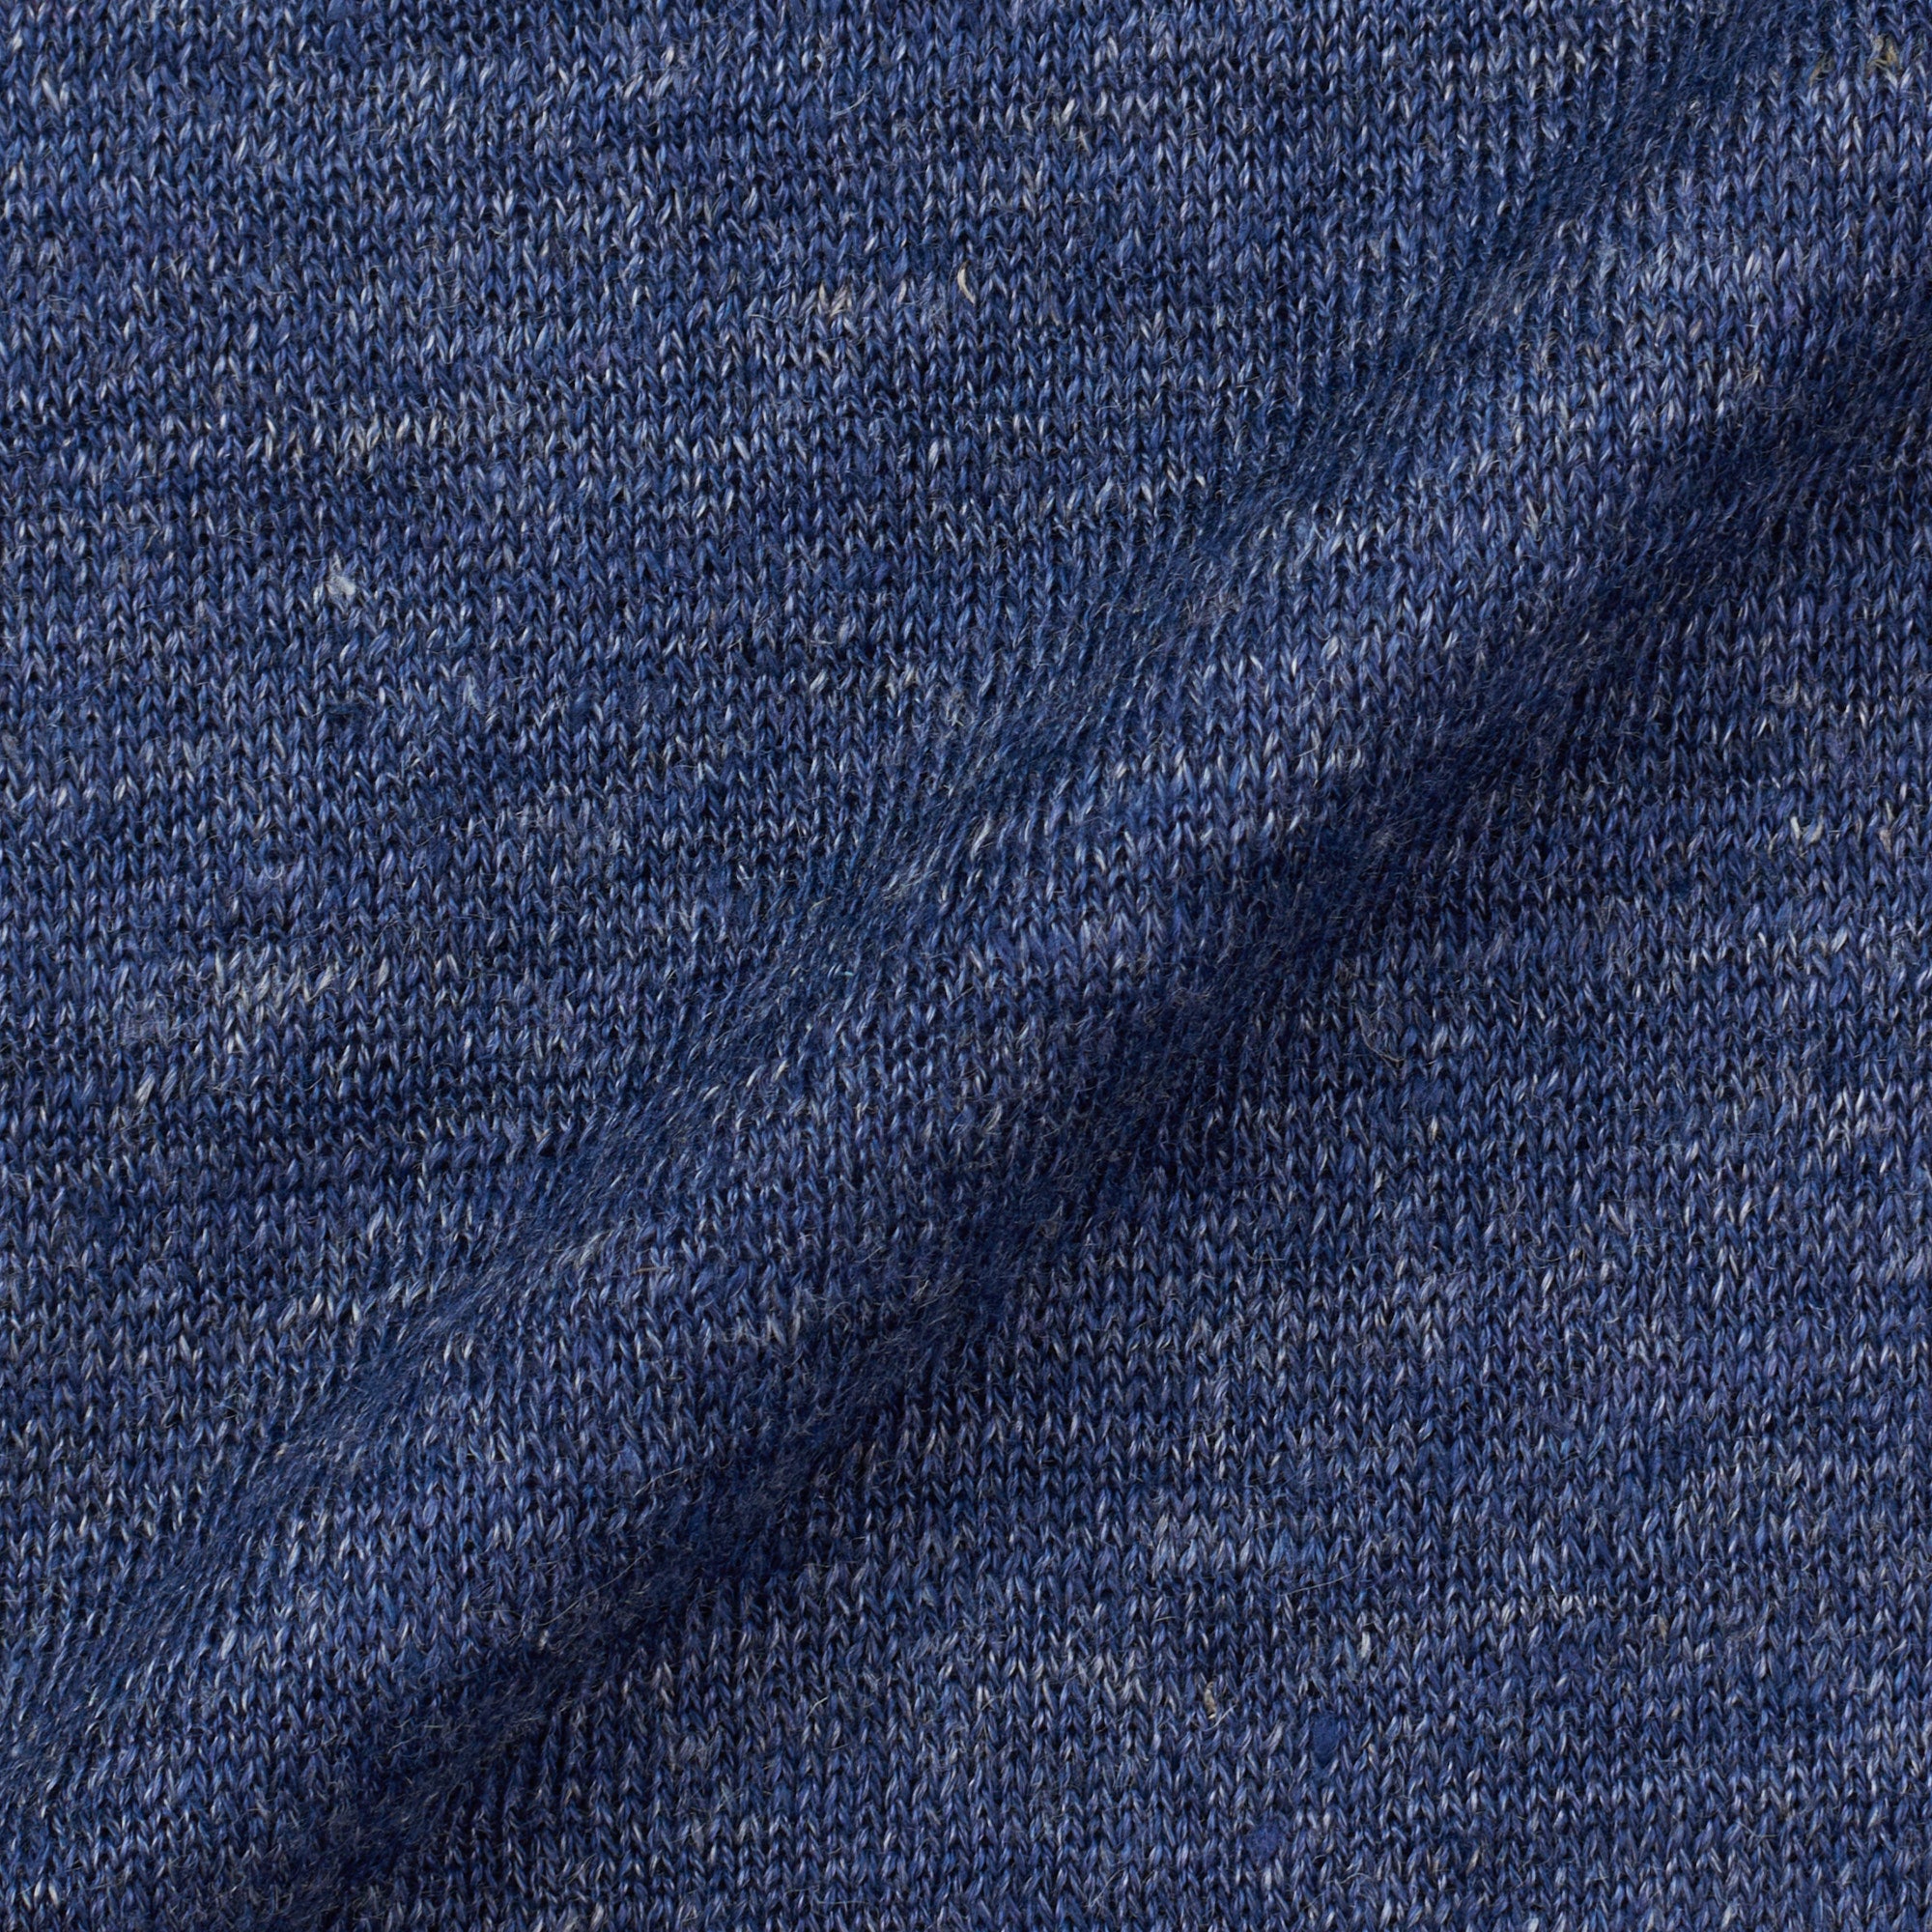 GRAN SASSO for VANNUCCI Blue Linen Knit Short Sleeve T-Shirt EU 50 NEW US M GRAN SASSO